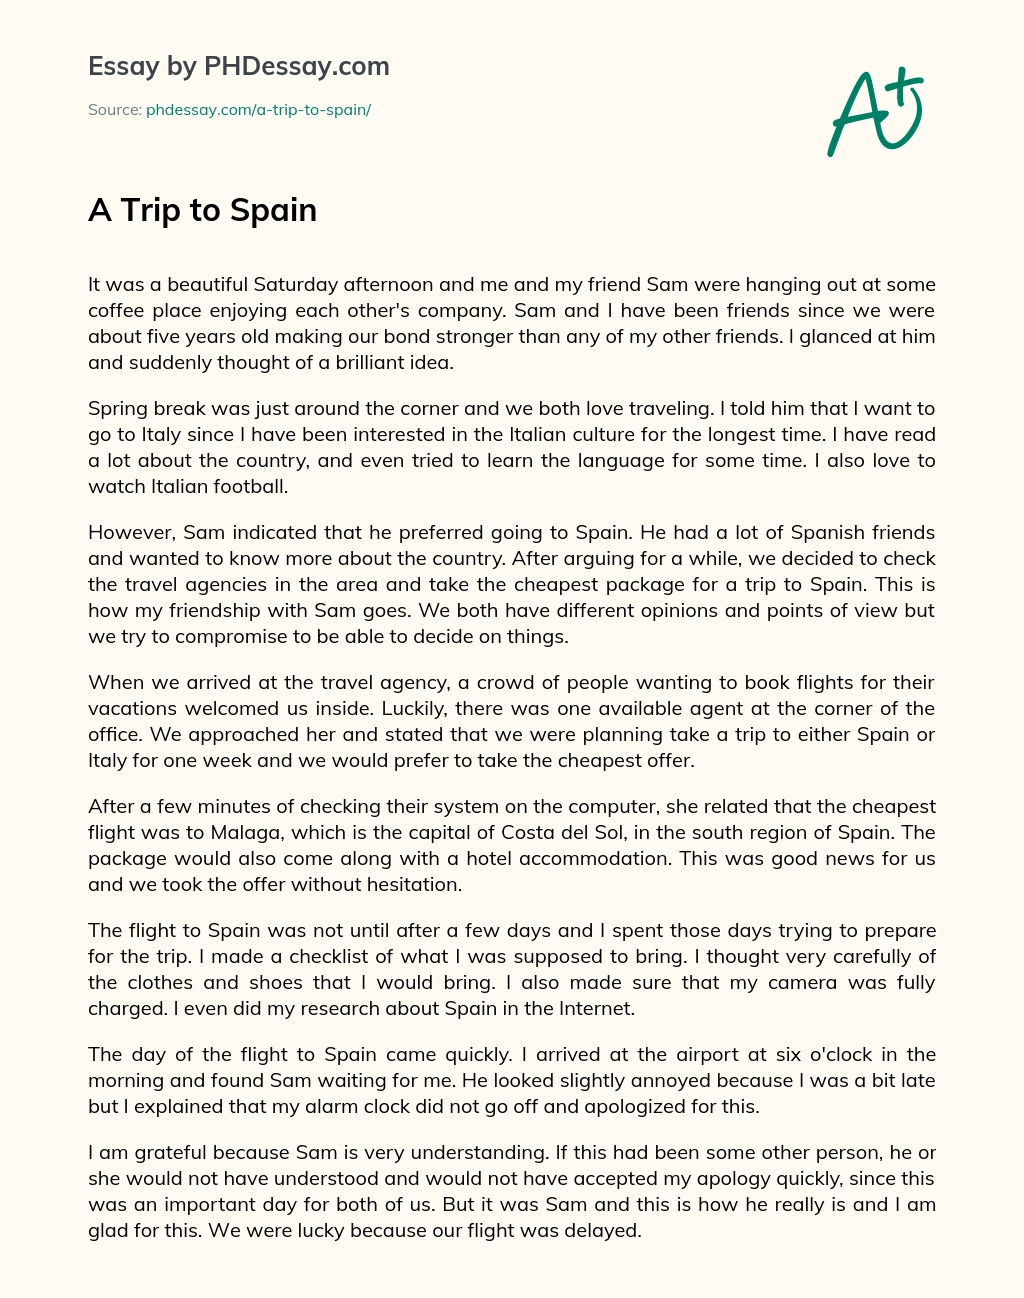 A Trip to Spain essay